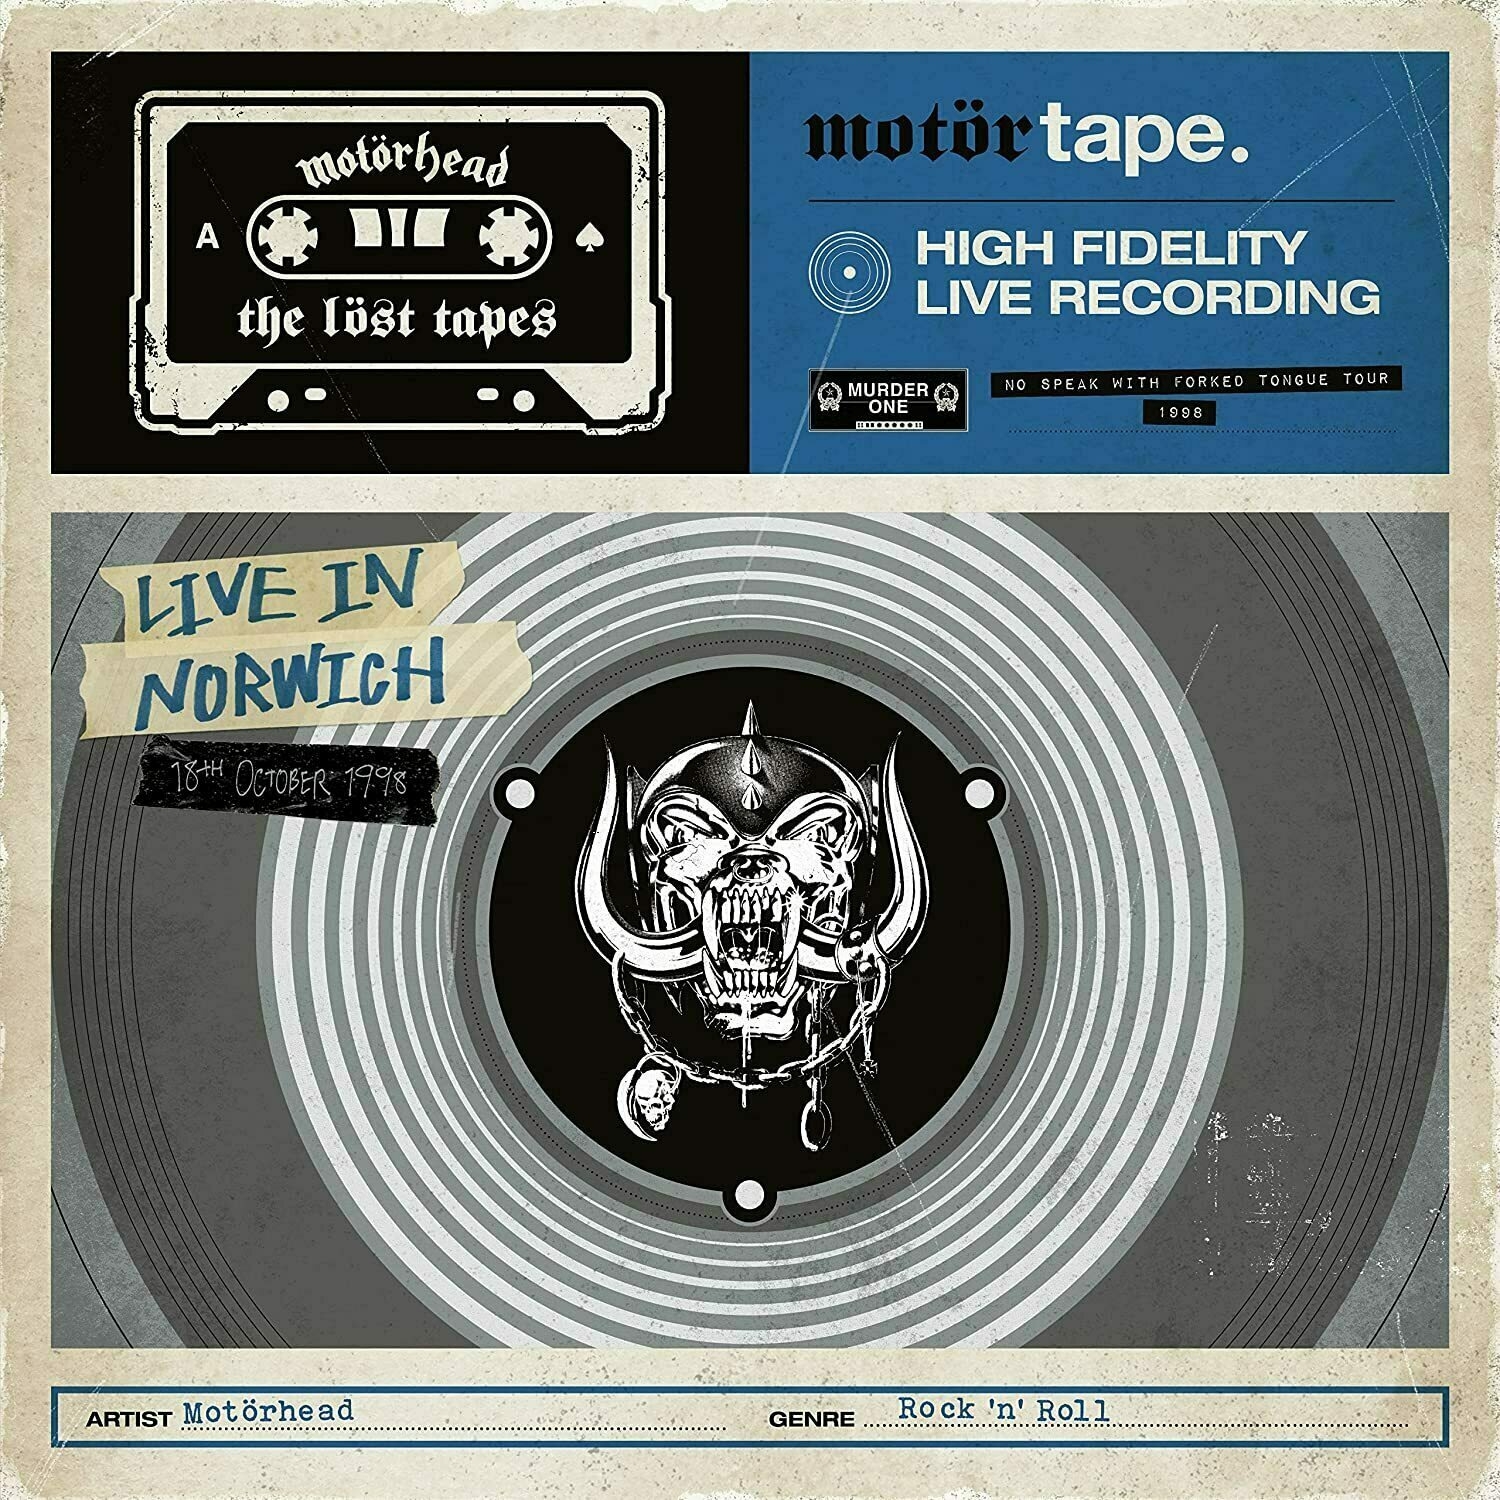 Виниловая Пластинка Motorhead The Lost Tapes Vol. 2 (Live In Norwich 1998) (4050538707762) цена и фото